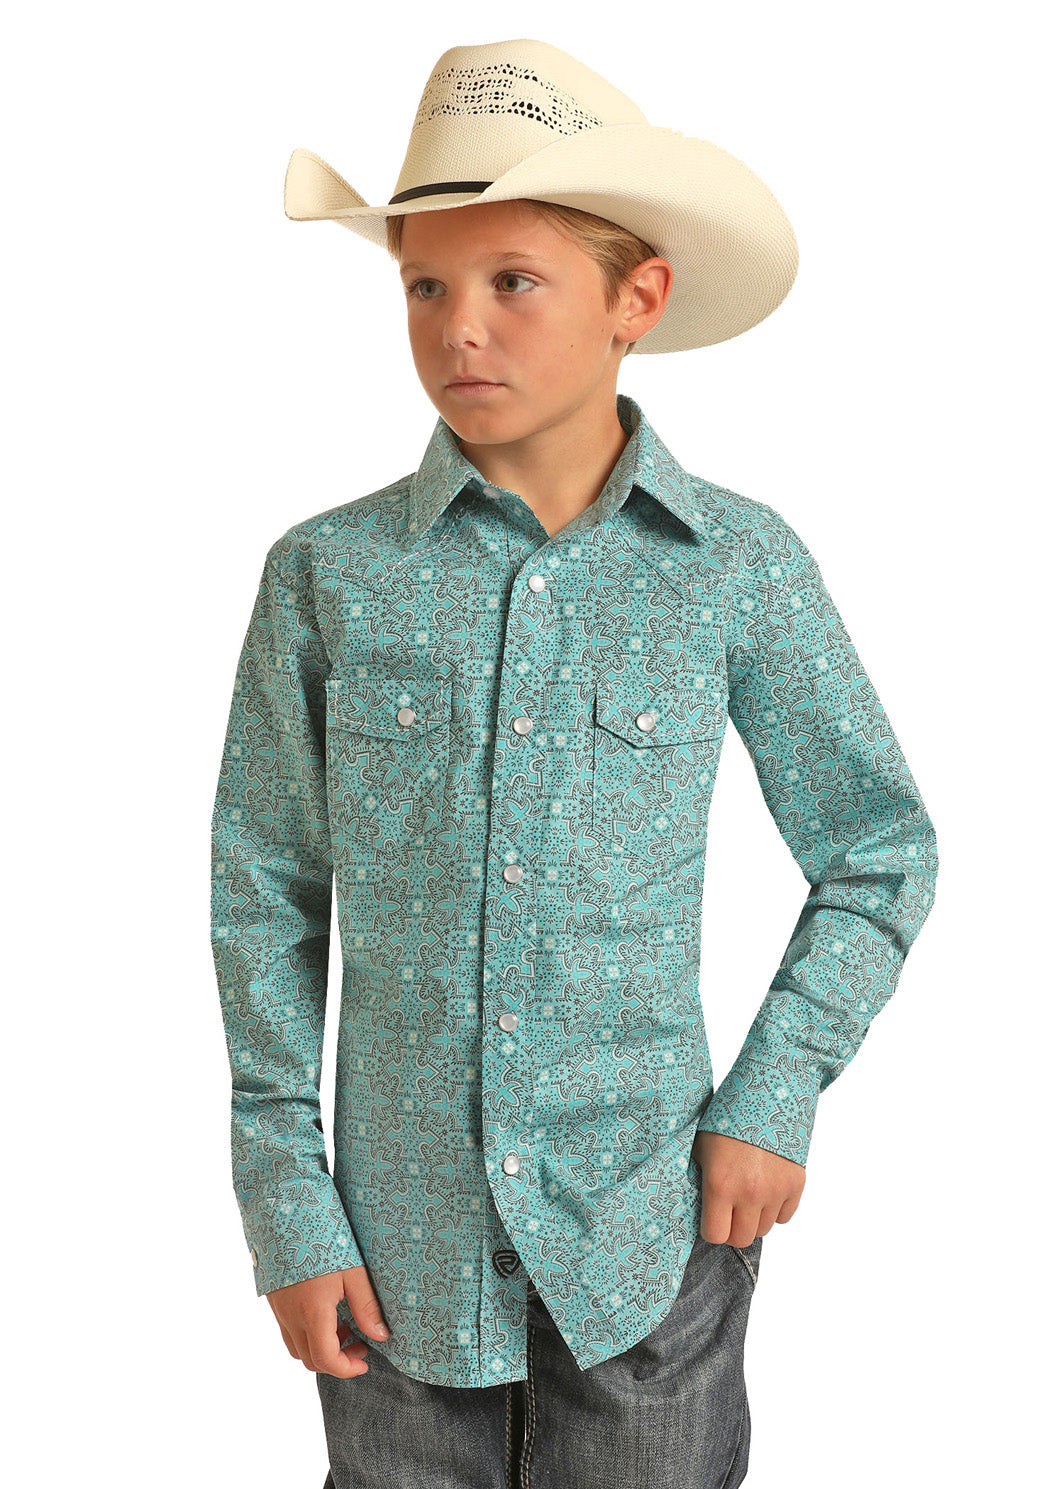 Panhandle Boys Long Sleeve Turquoise Print Shirt